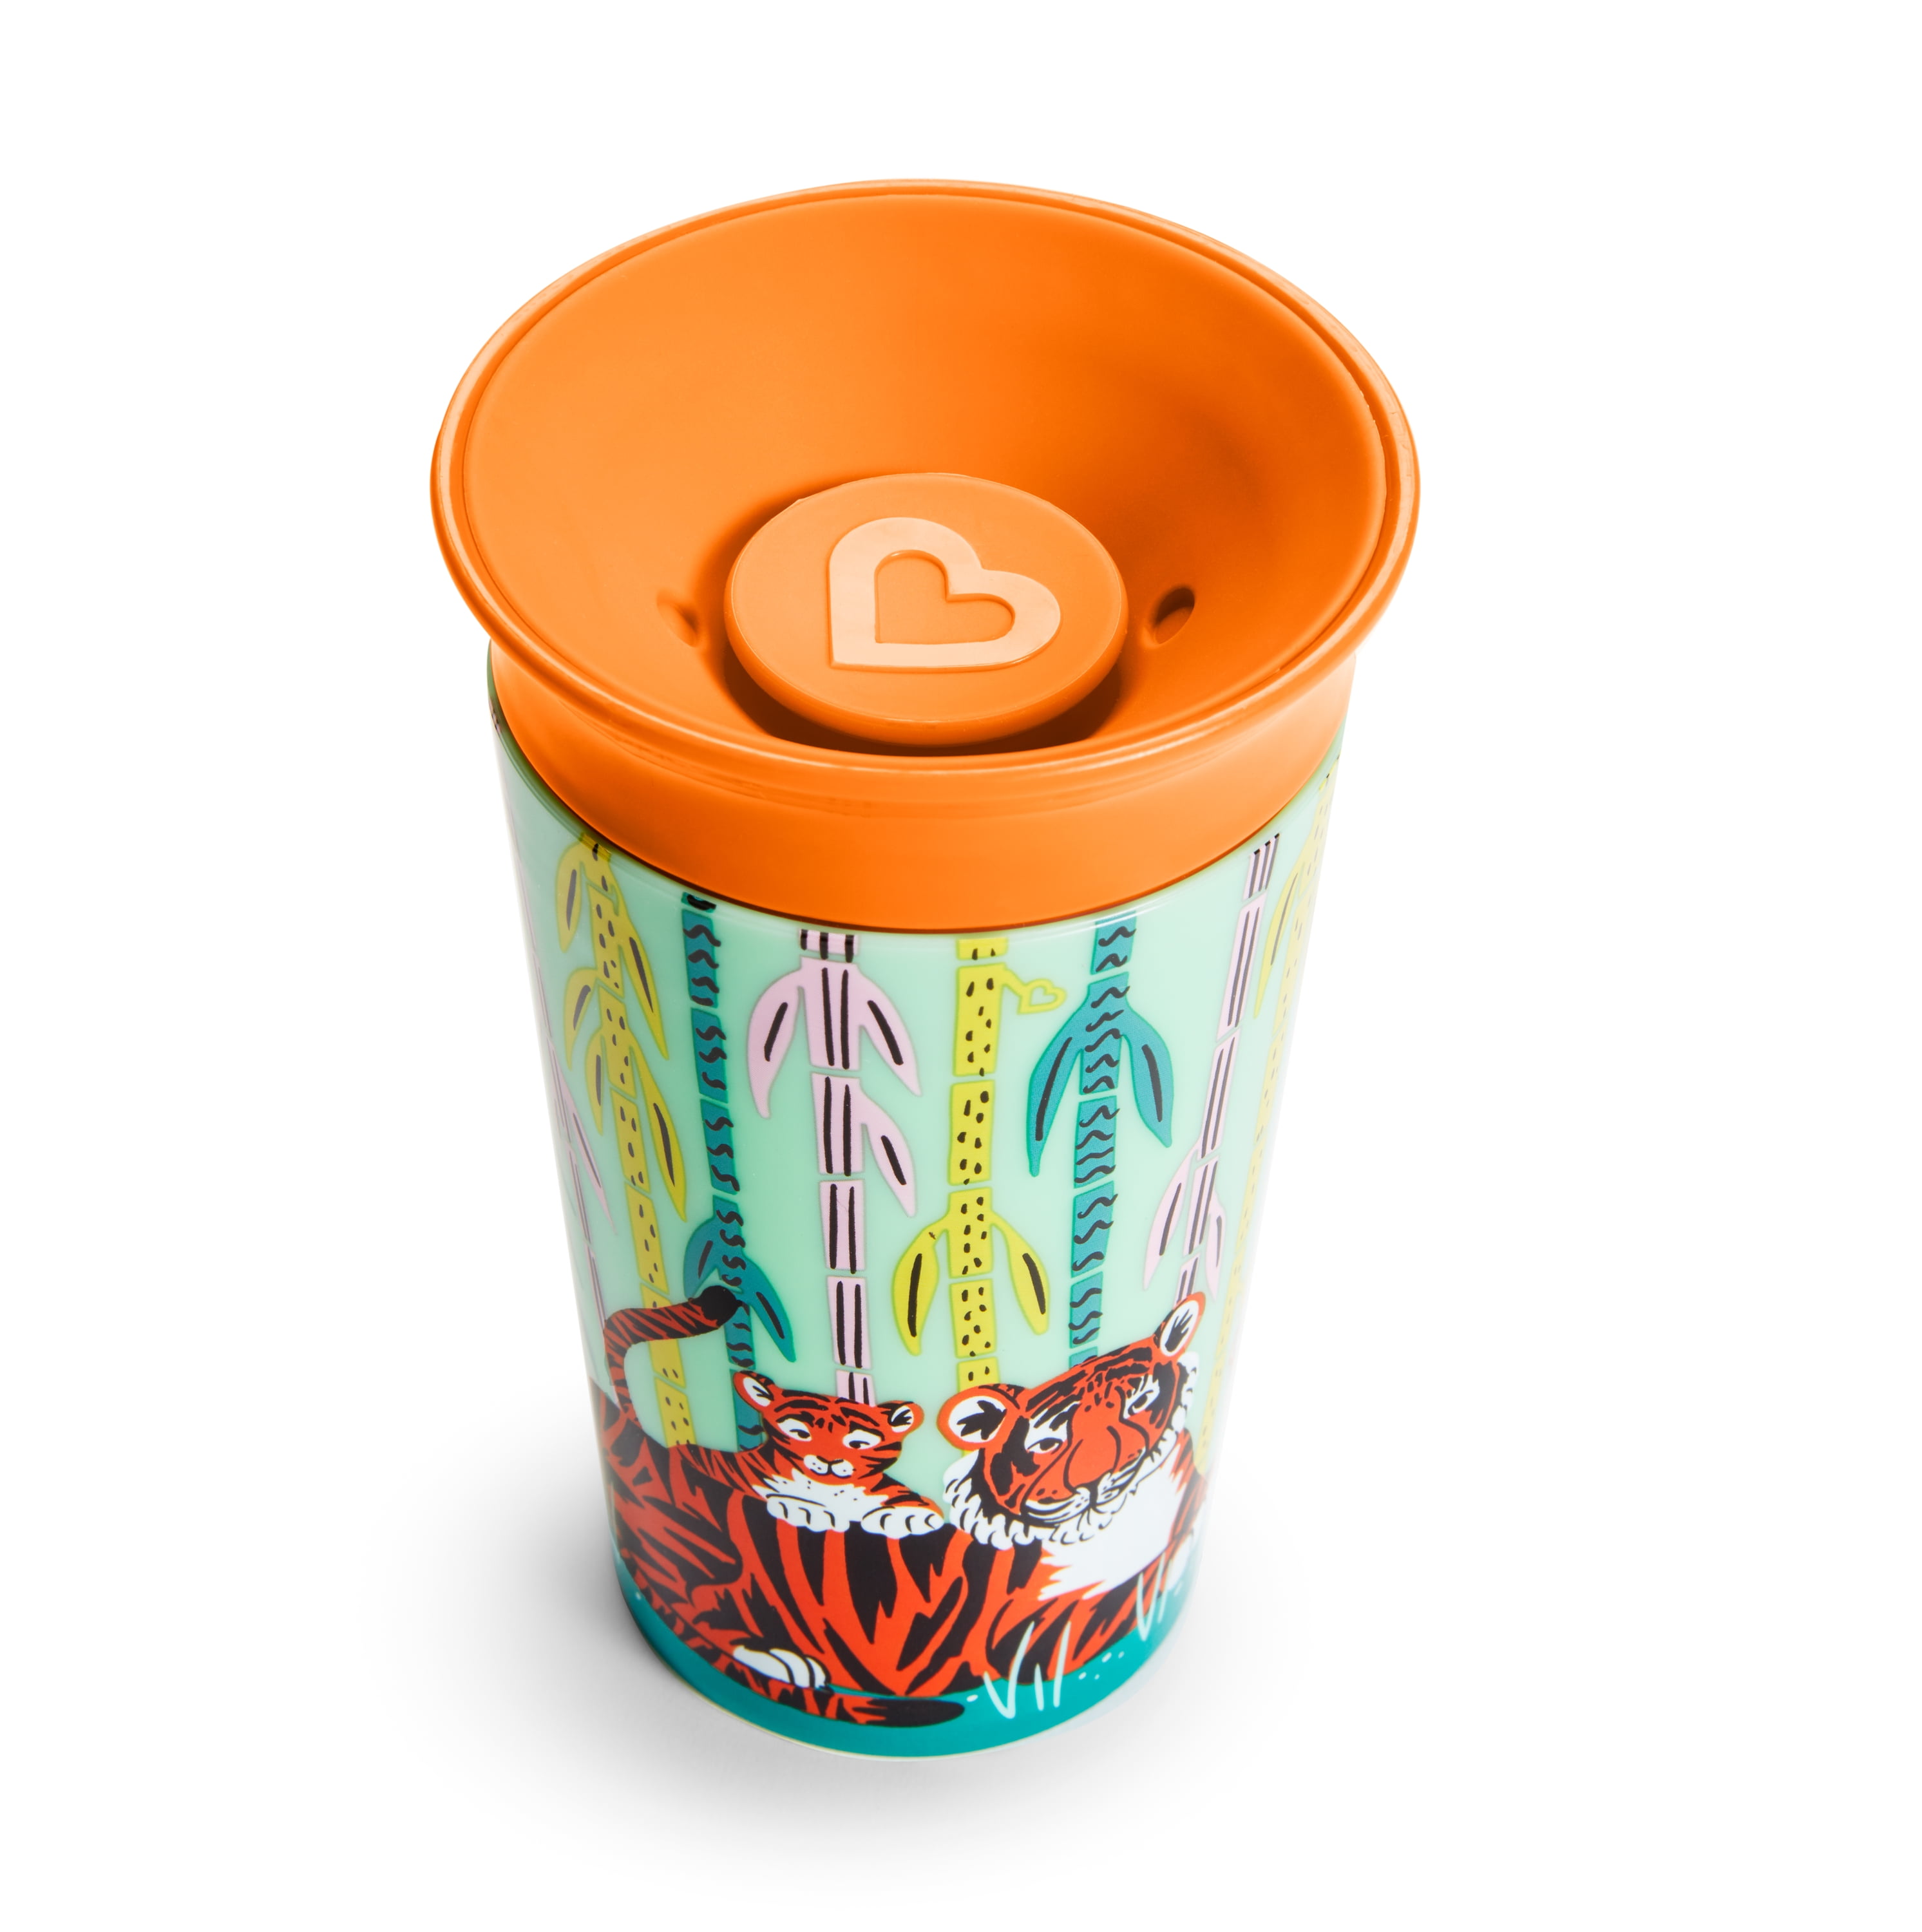 Munchkin Miracle 360 WildLove Sippy Cup, 6 oz, 2 Pack, Bee/Lemur